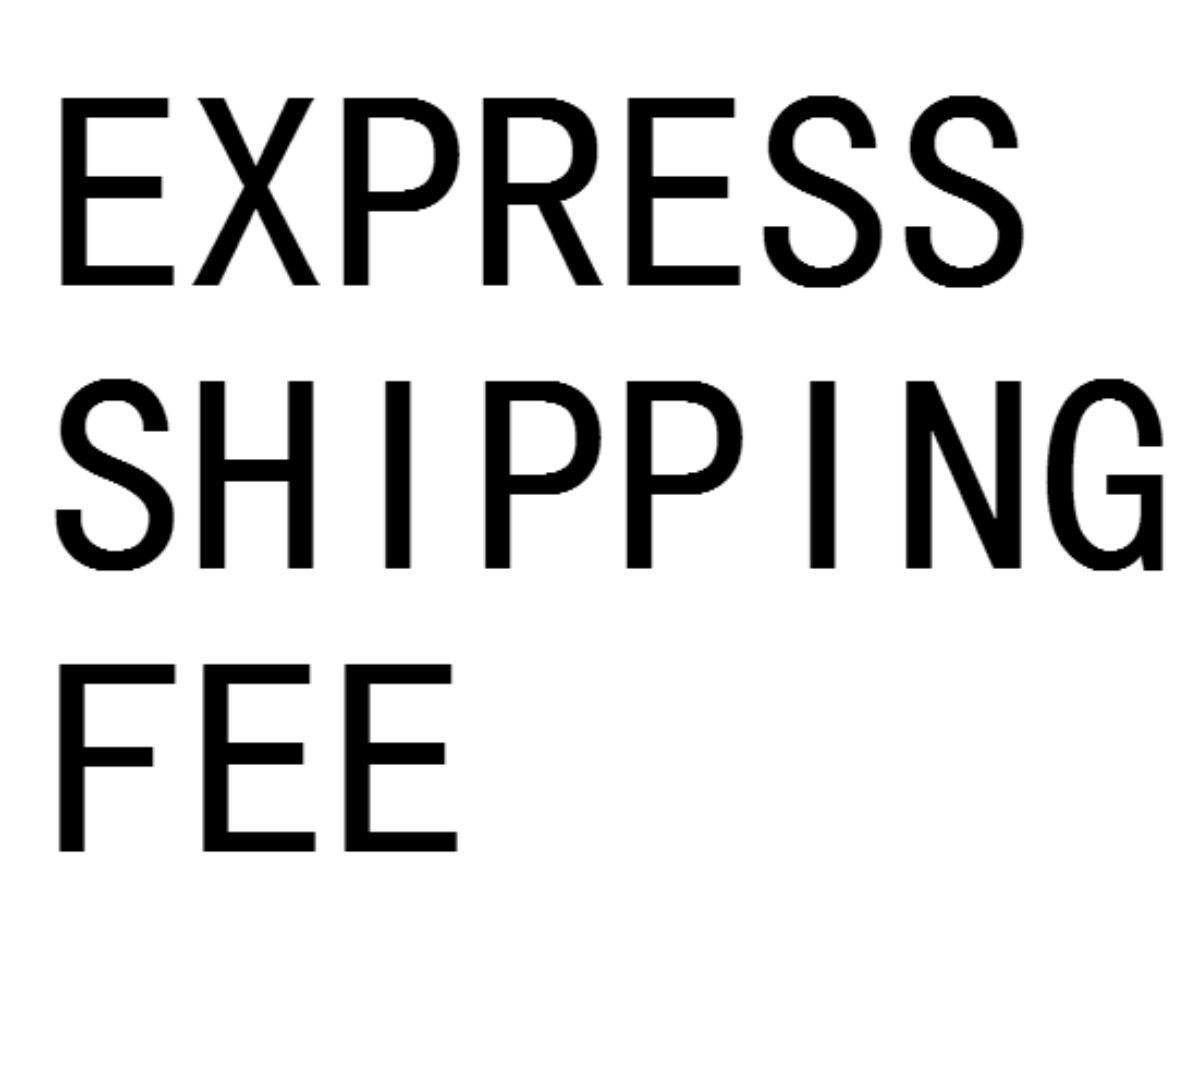 Express shipping #0001